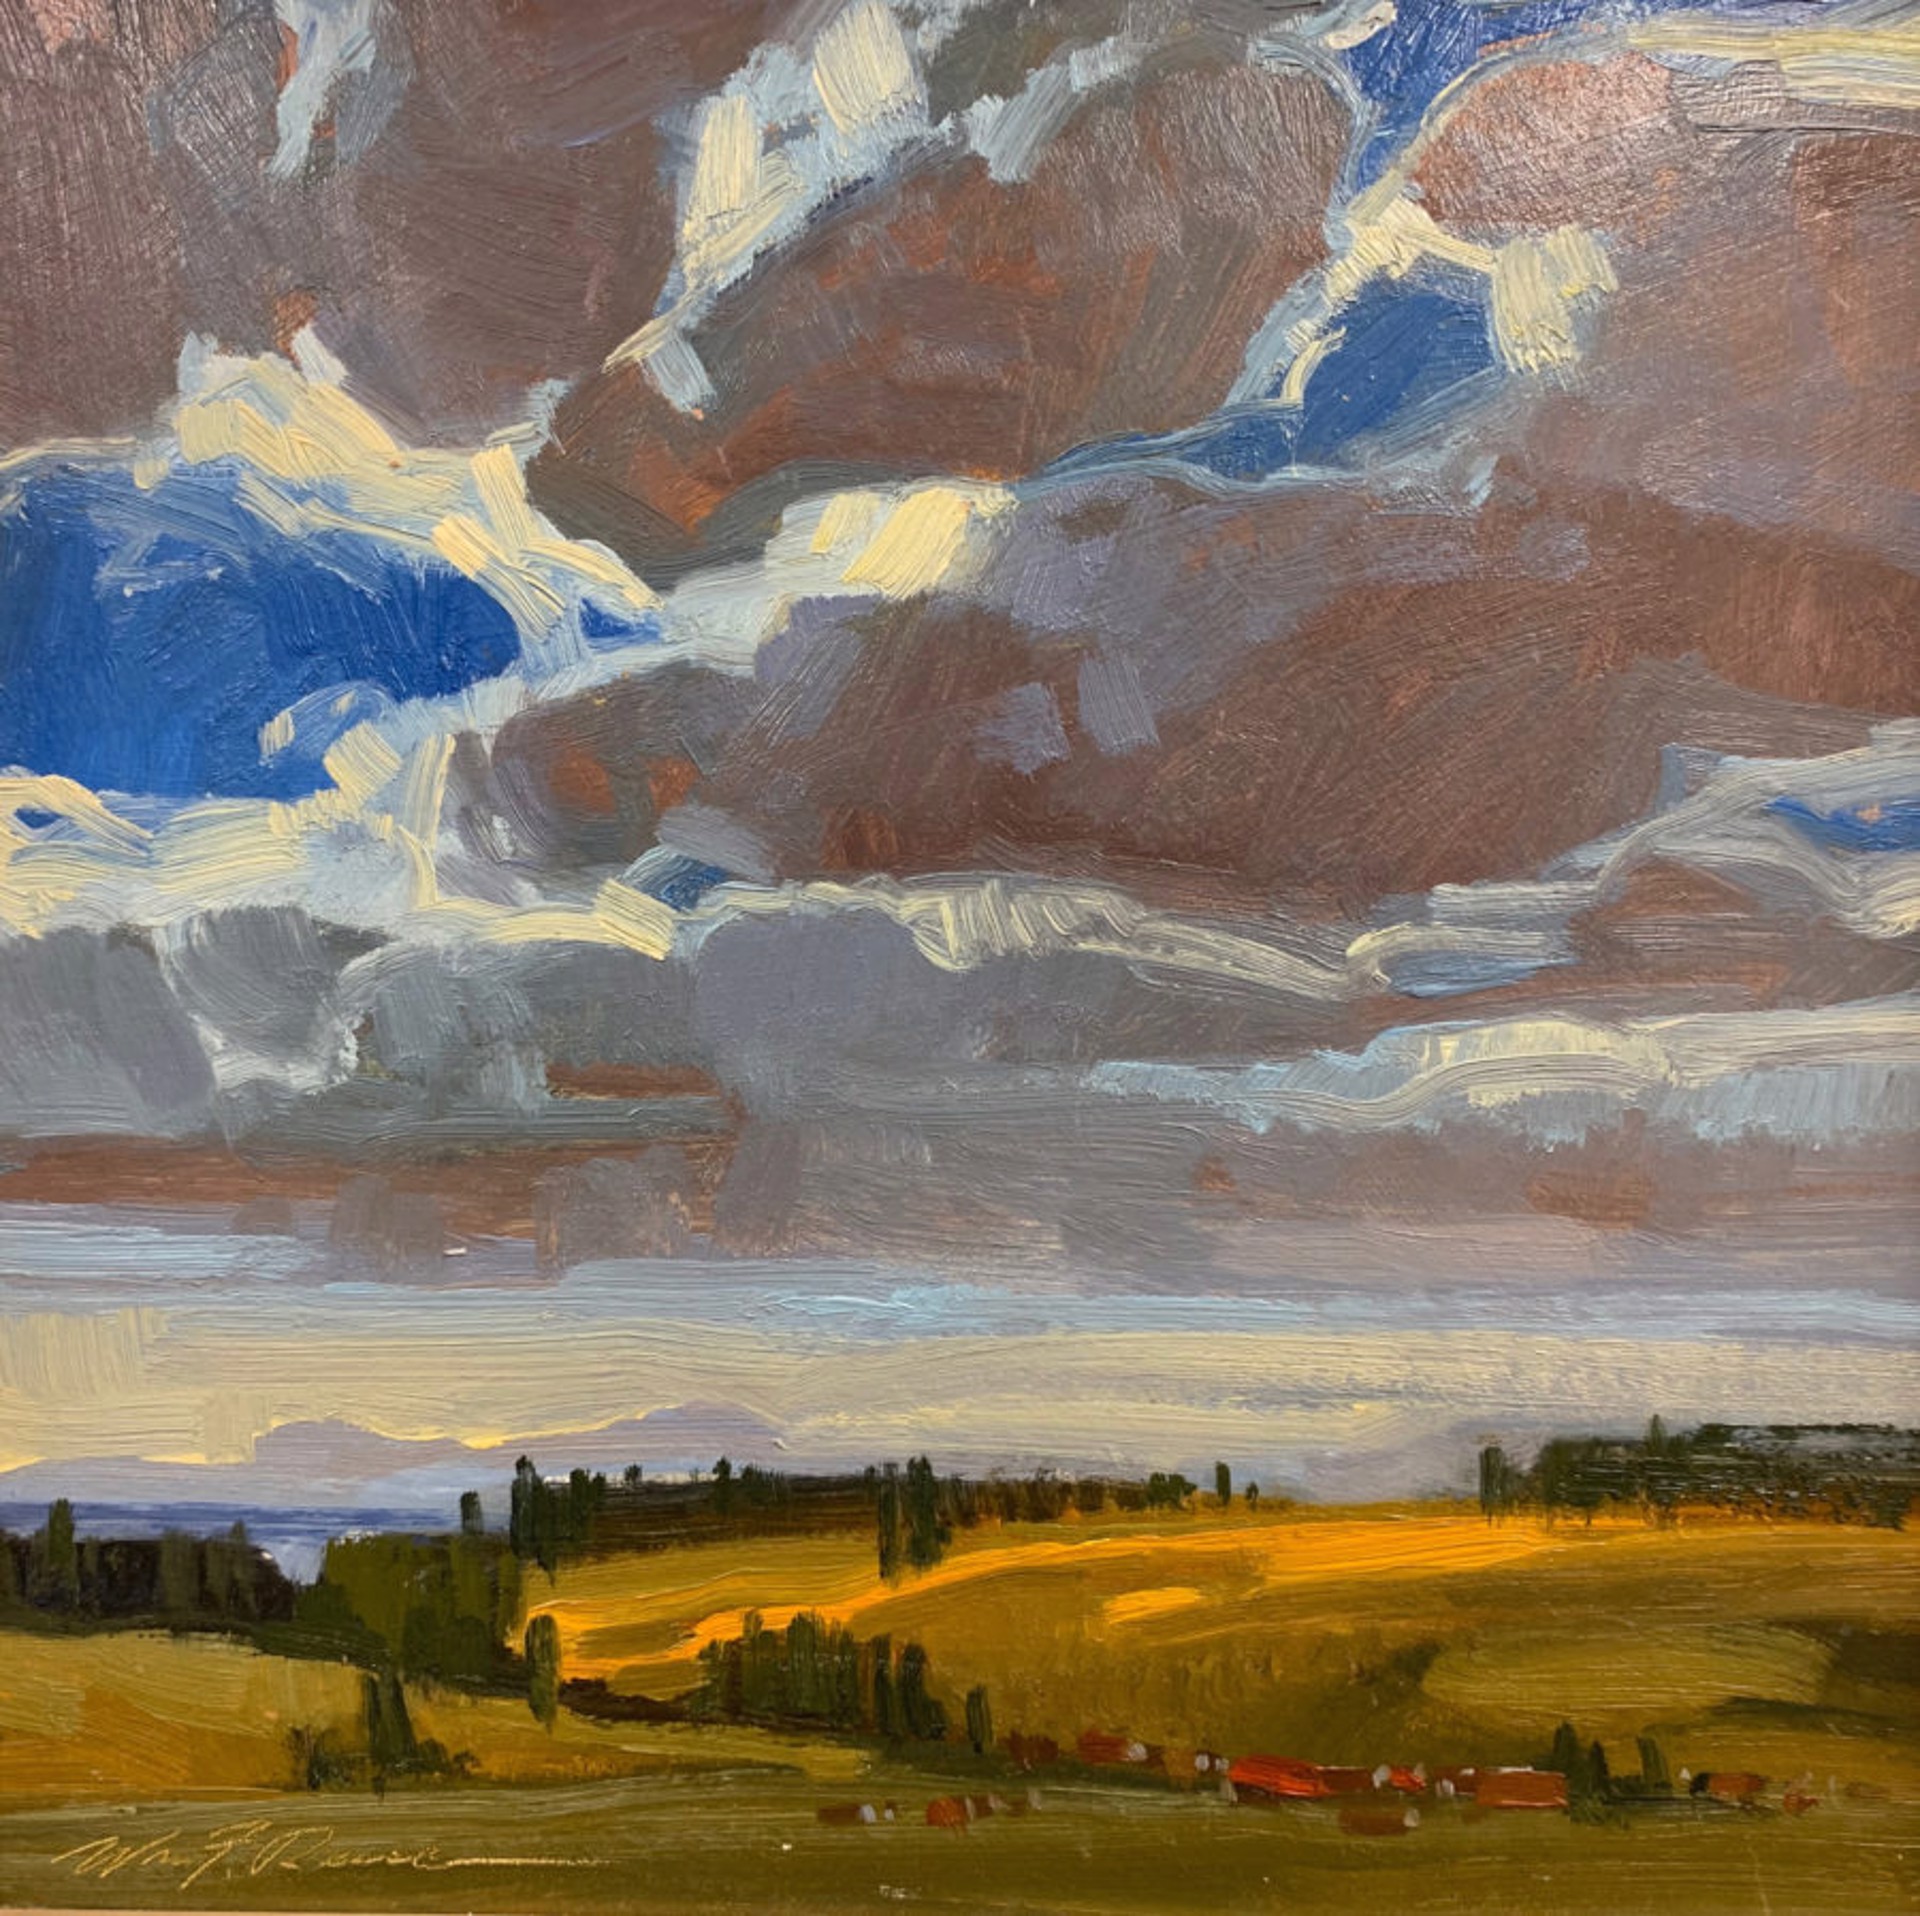 Summer Skies, Joseph Oregon by William F. Reese